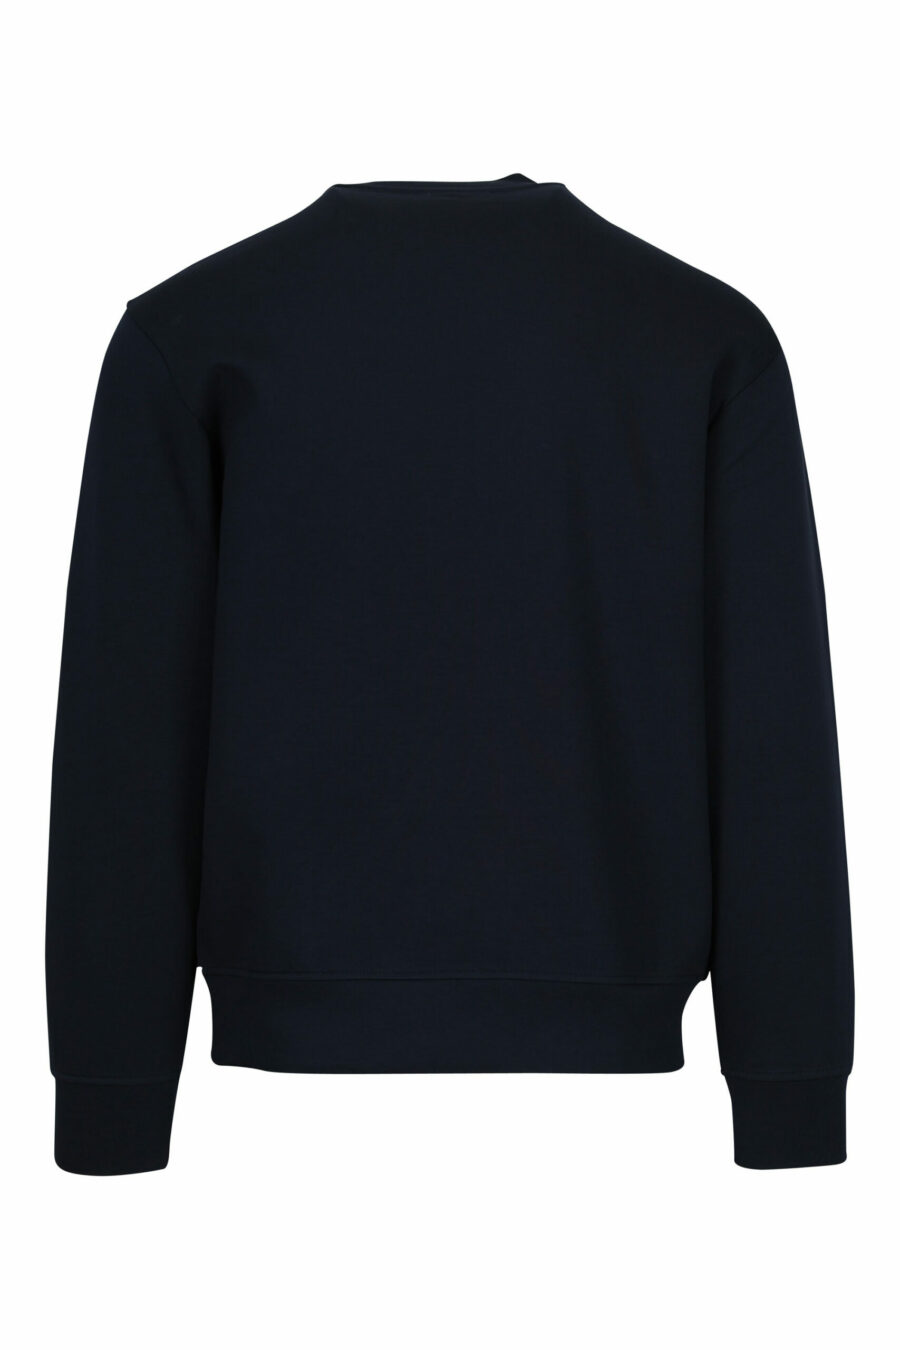 Dark blue sweatshirt with "emporio" maxilogo - 8058947979158 2 scaled